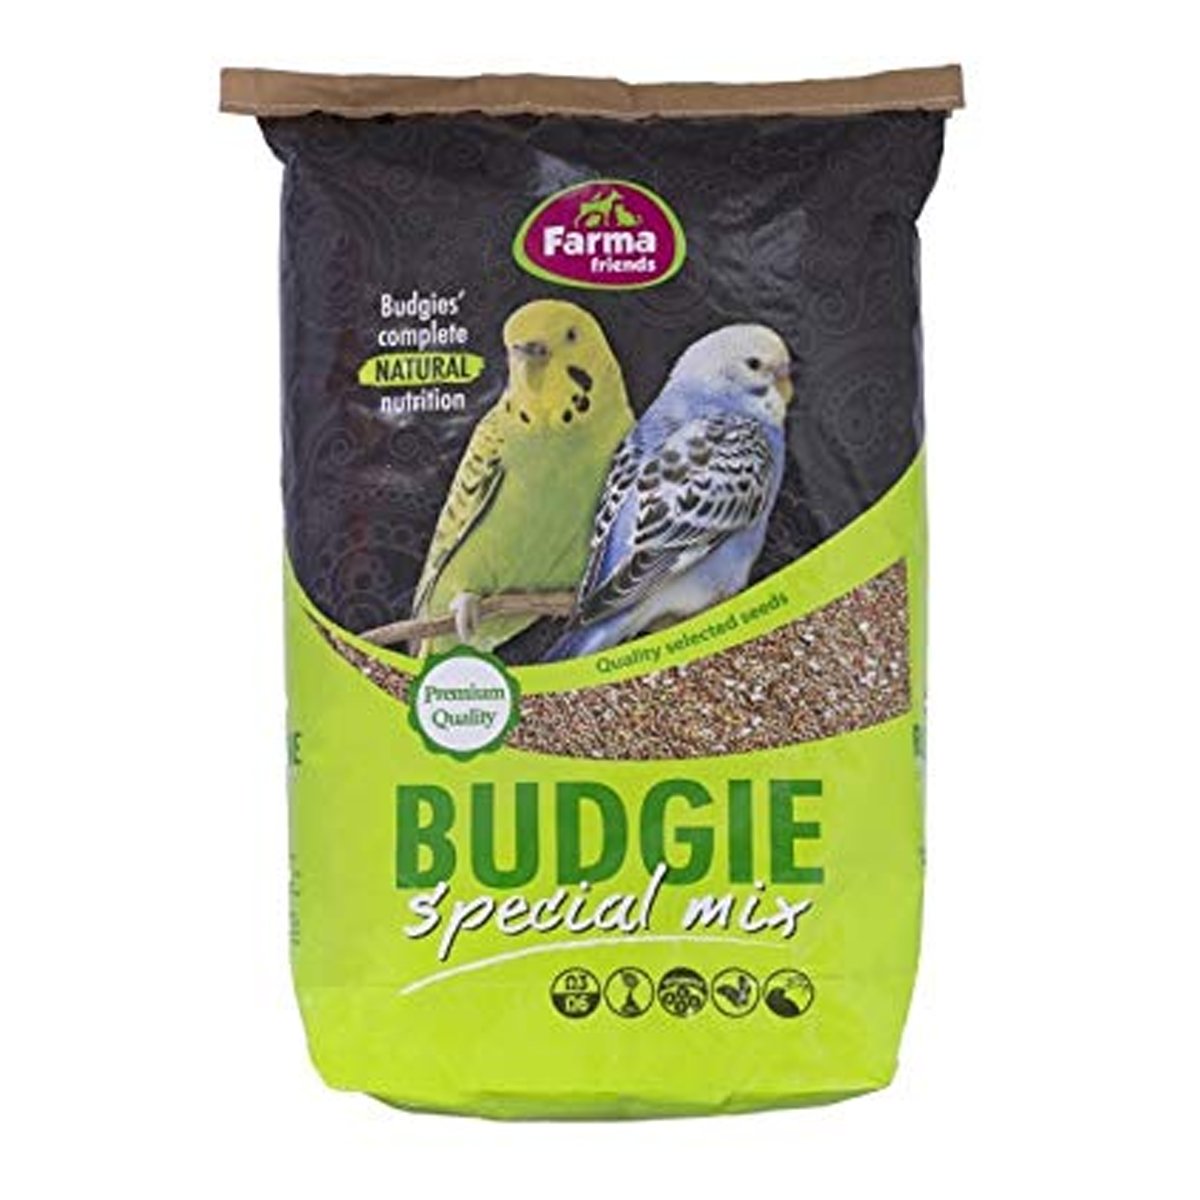 FARMA Budgie Special Mix Natural Nutrition 20 KG